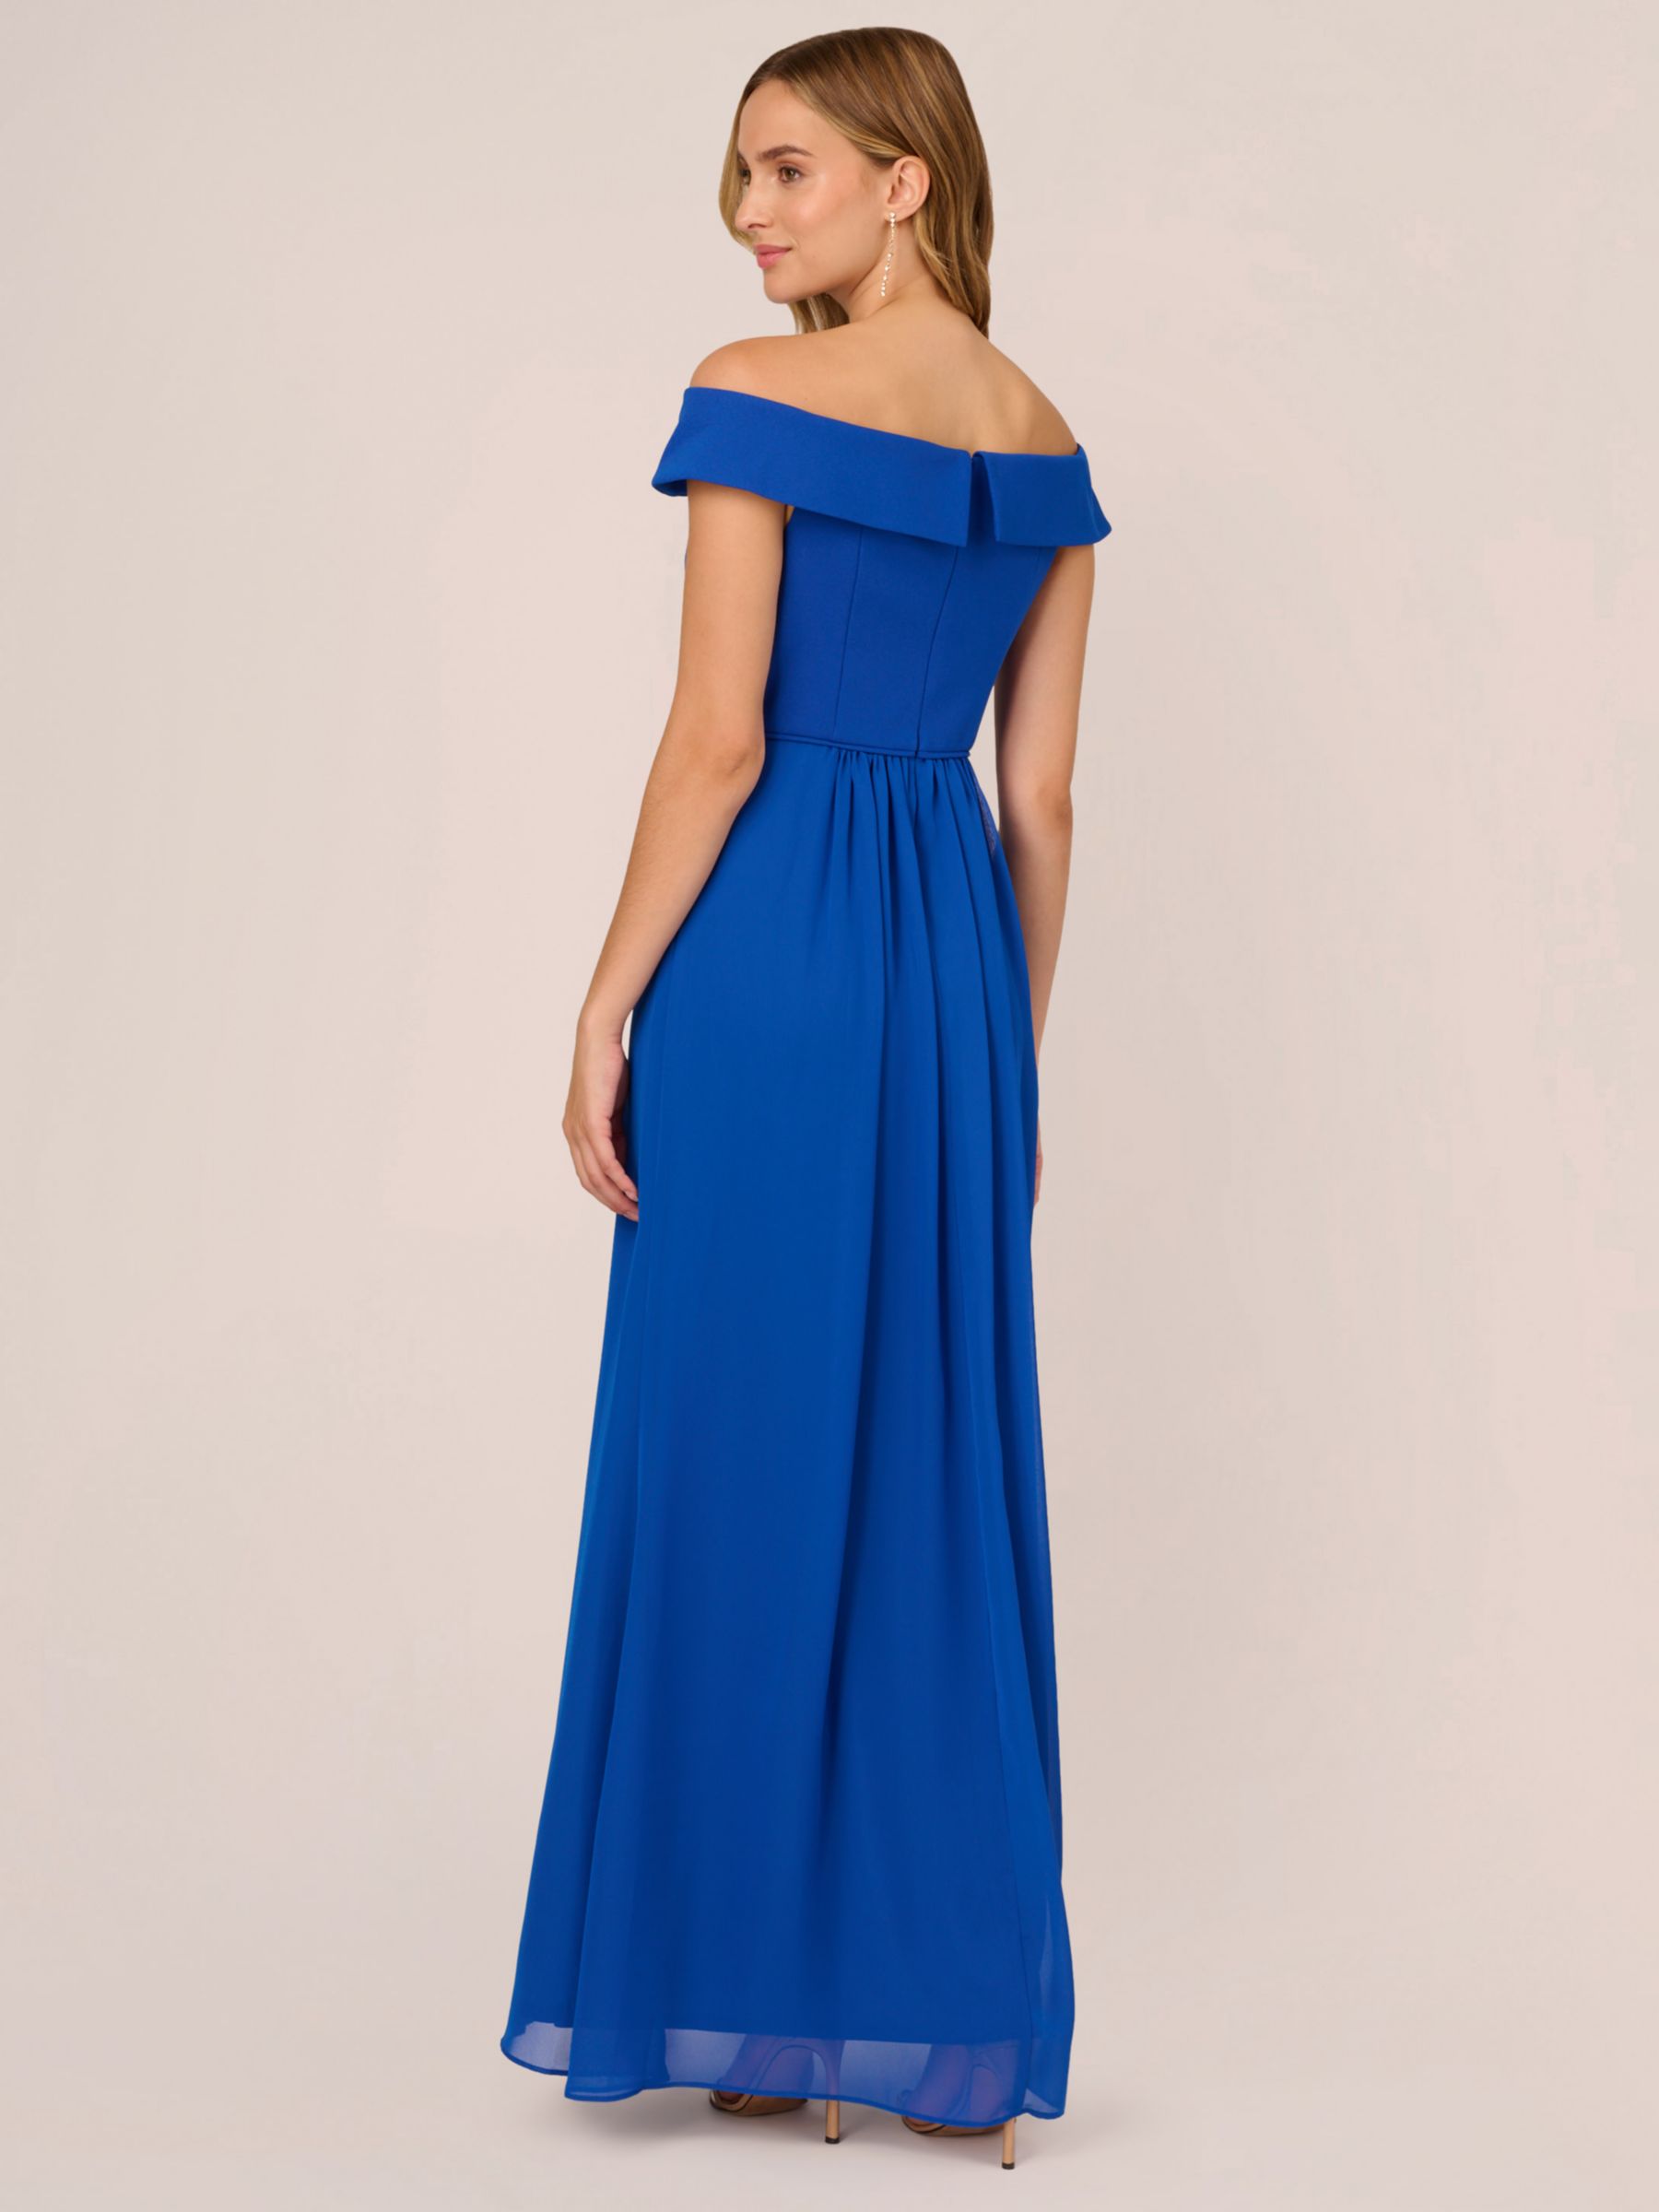 Adrianna Papell Crepe Chiffon Maxi Dress, Violet Cobalt, 8